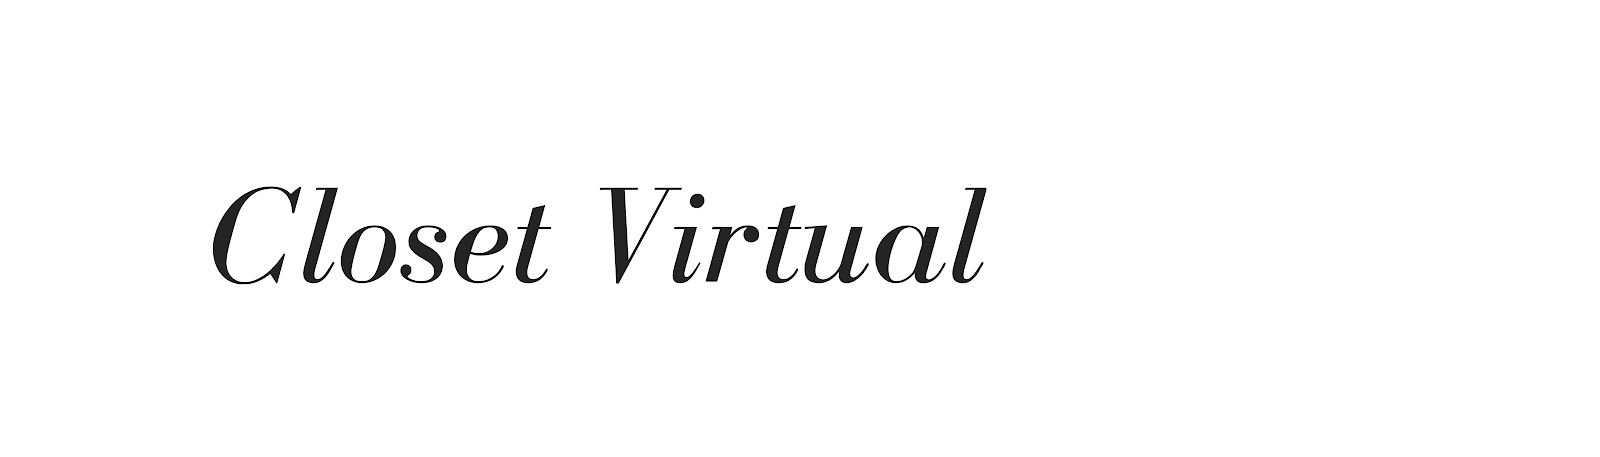 Closet Virtual